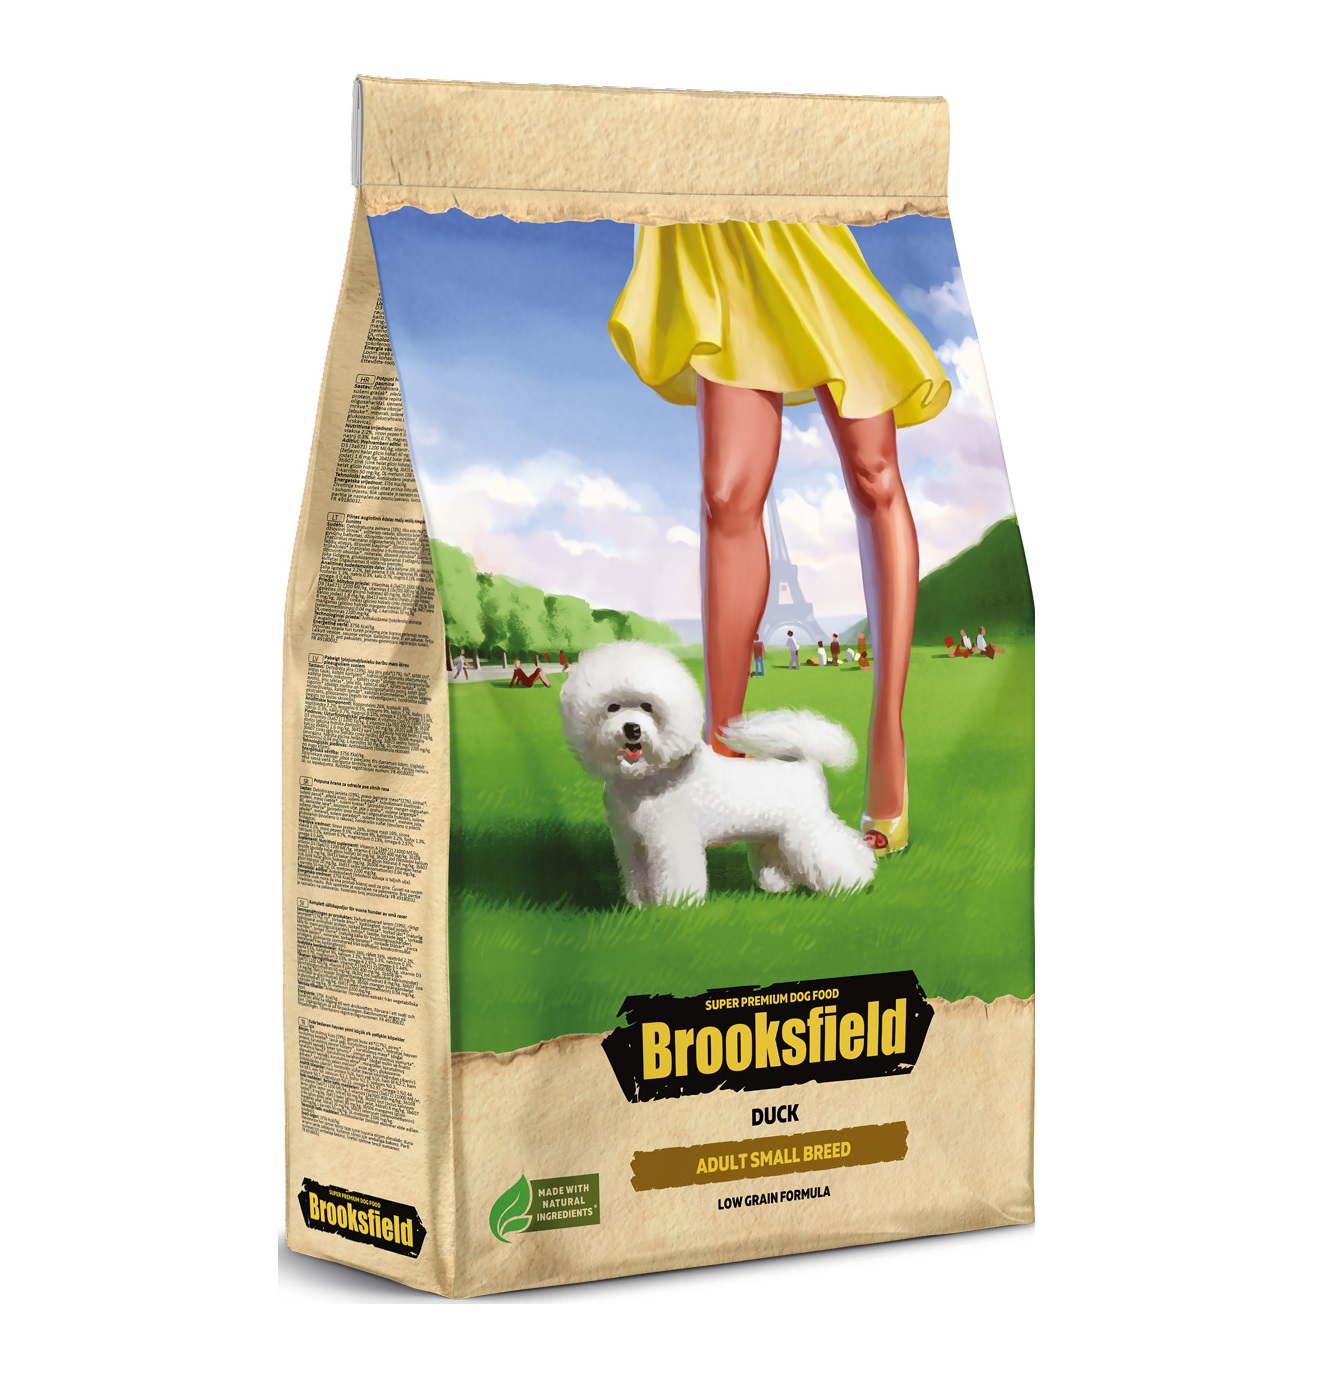 Бруксфилд 10кг - Утка - для Мелких собак (Brooksfield) + Подарок